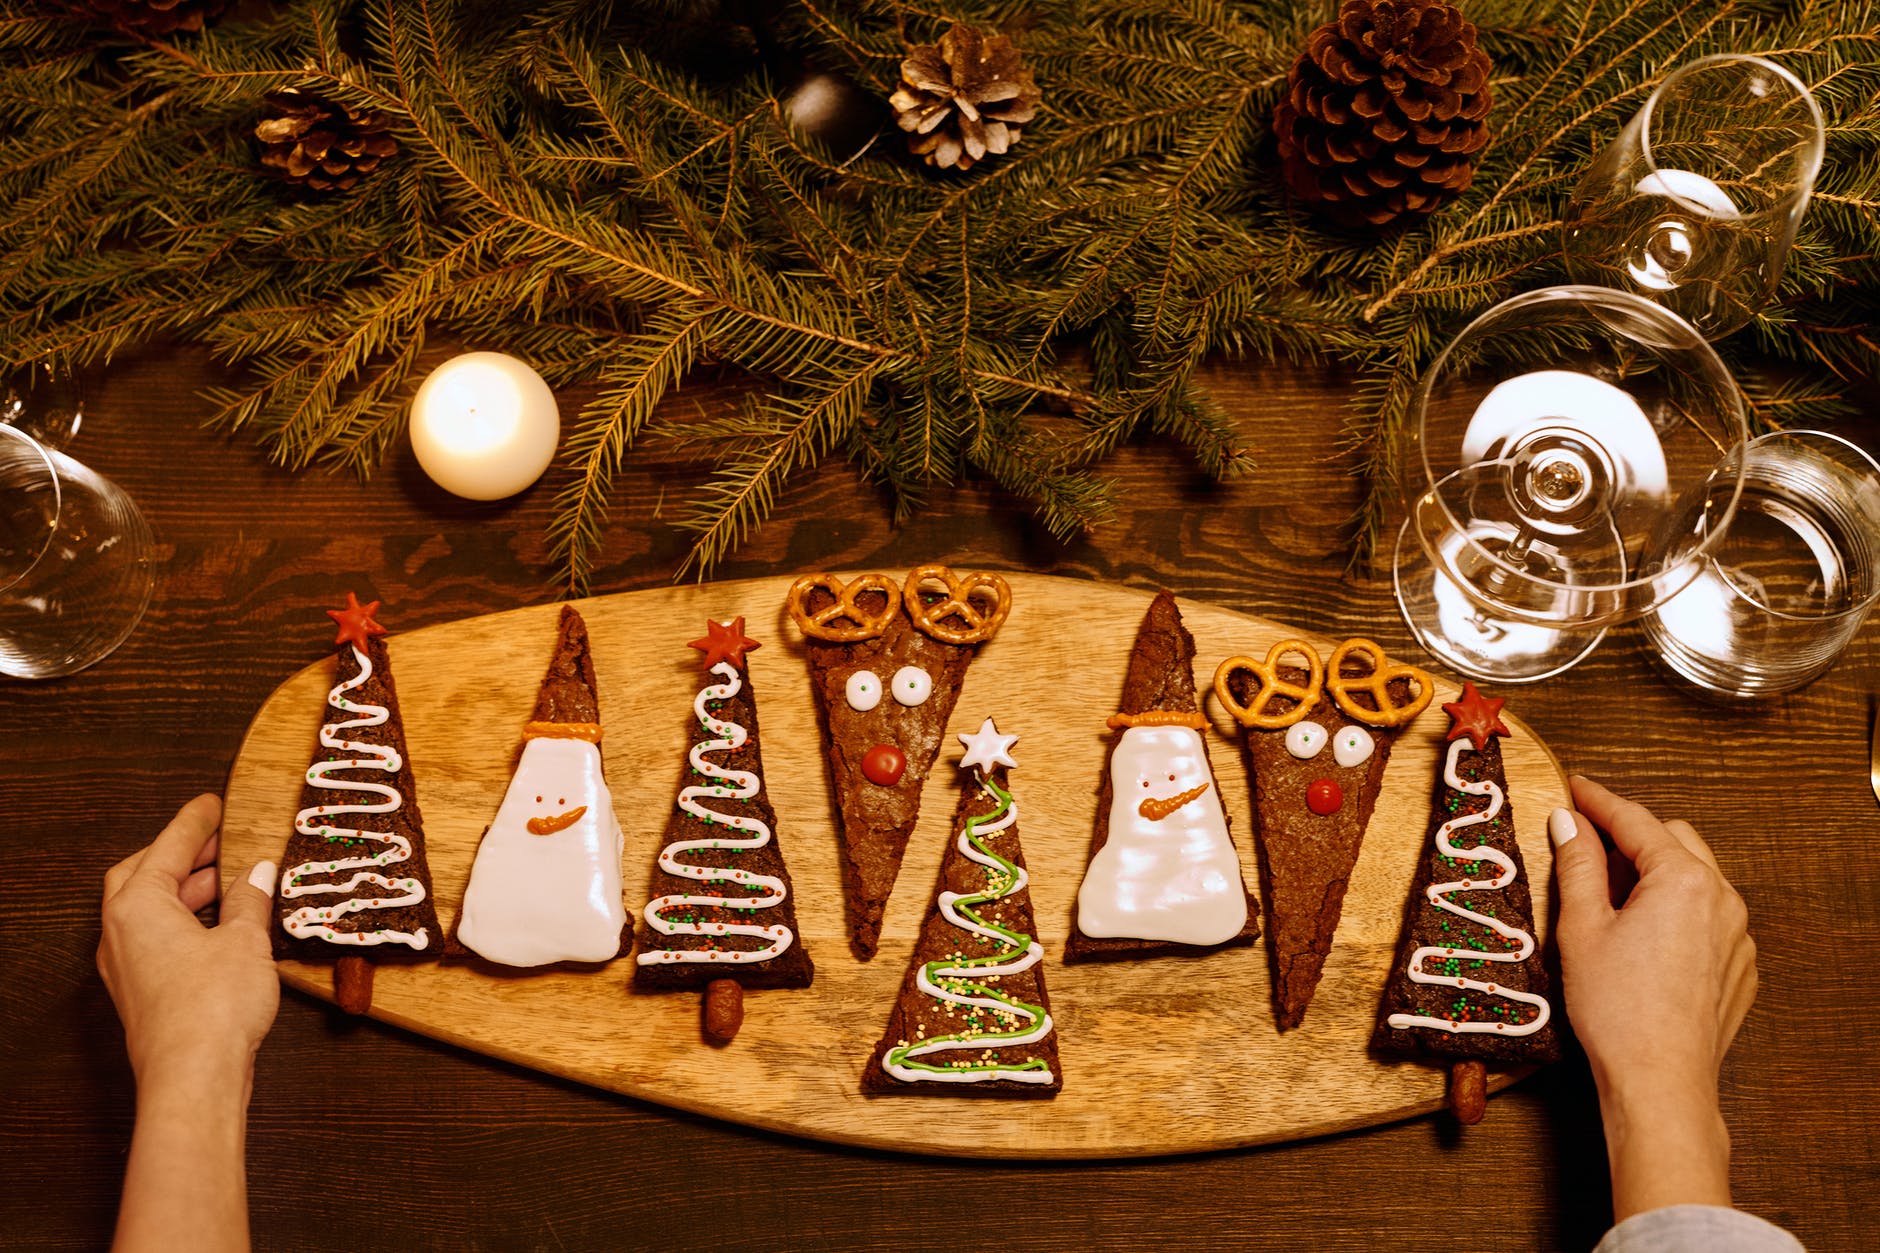 Festive brownies decorated to look like reindeers, snowmen and christmas trees!